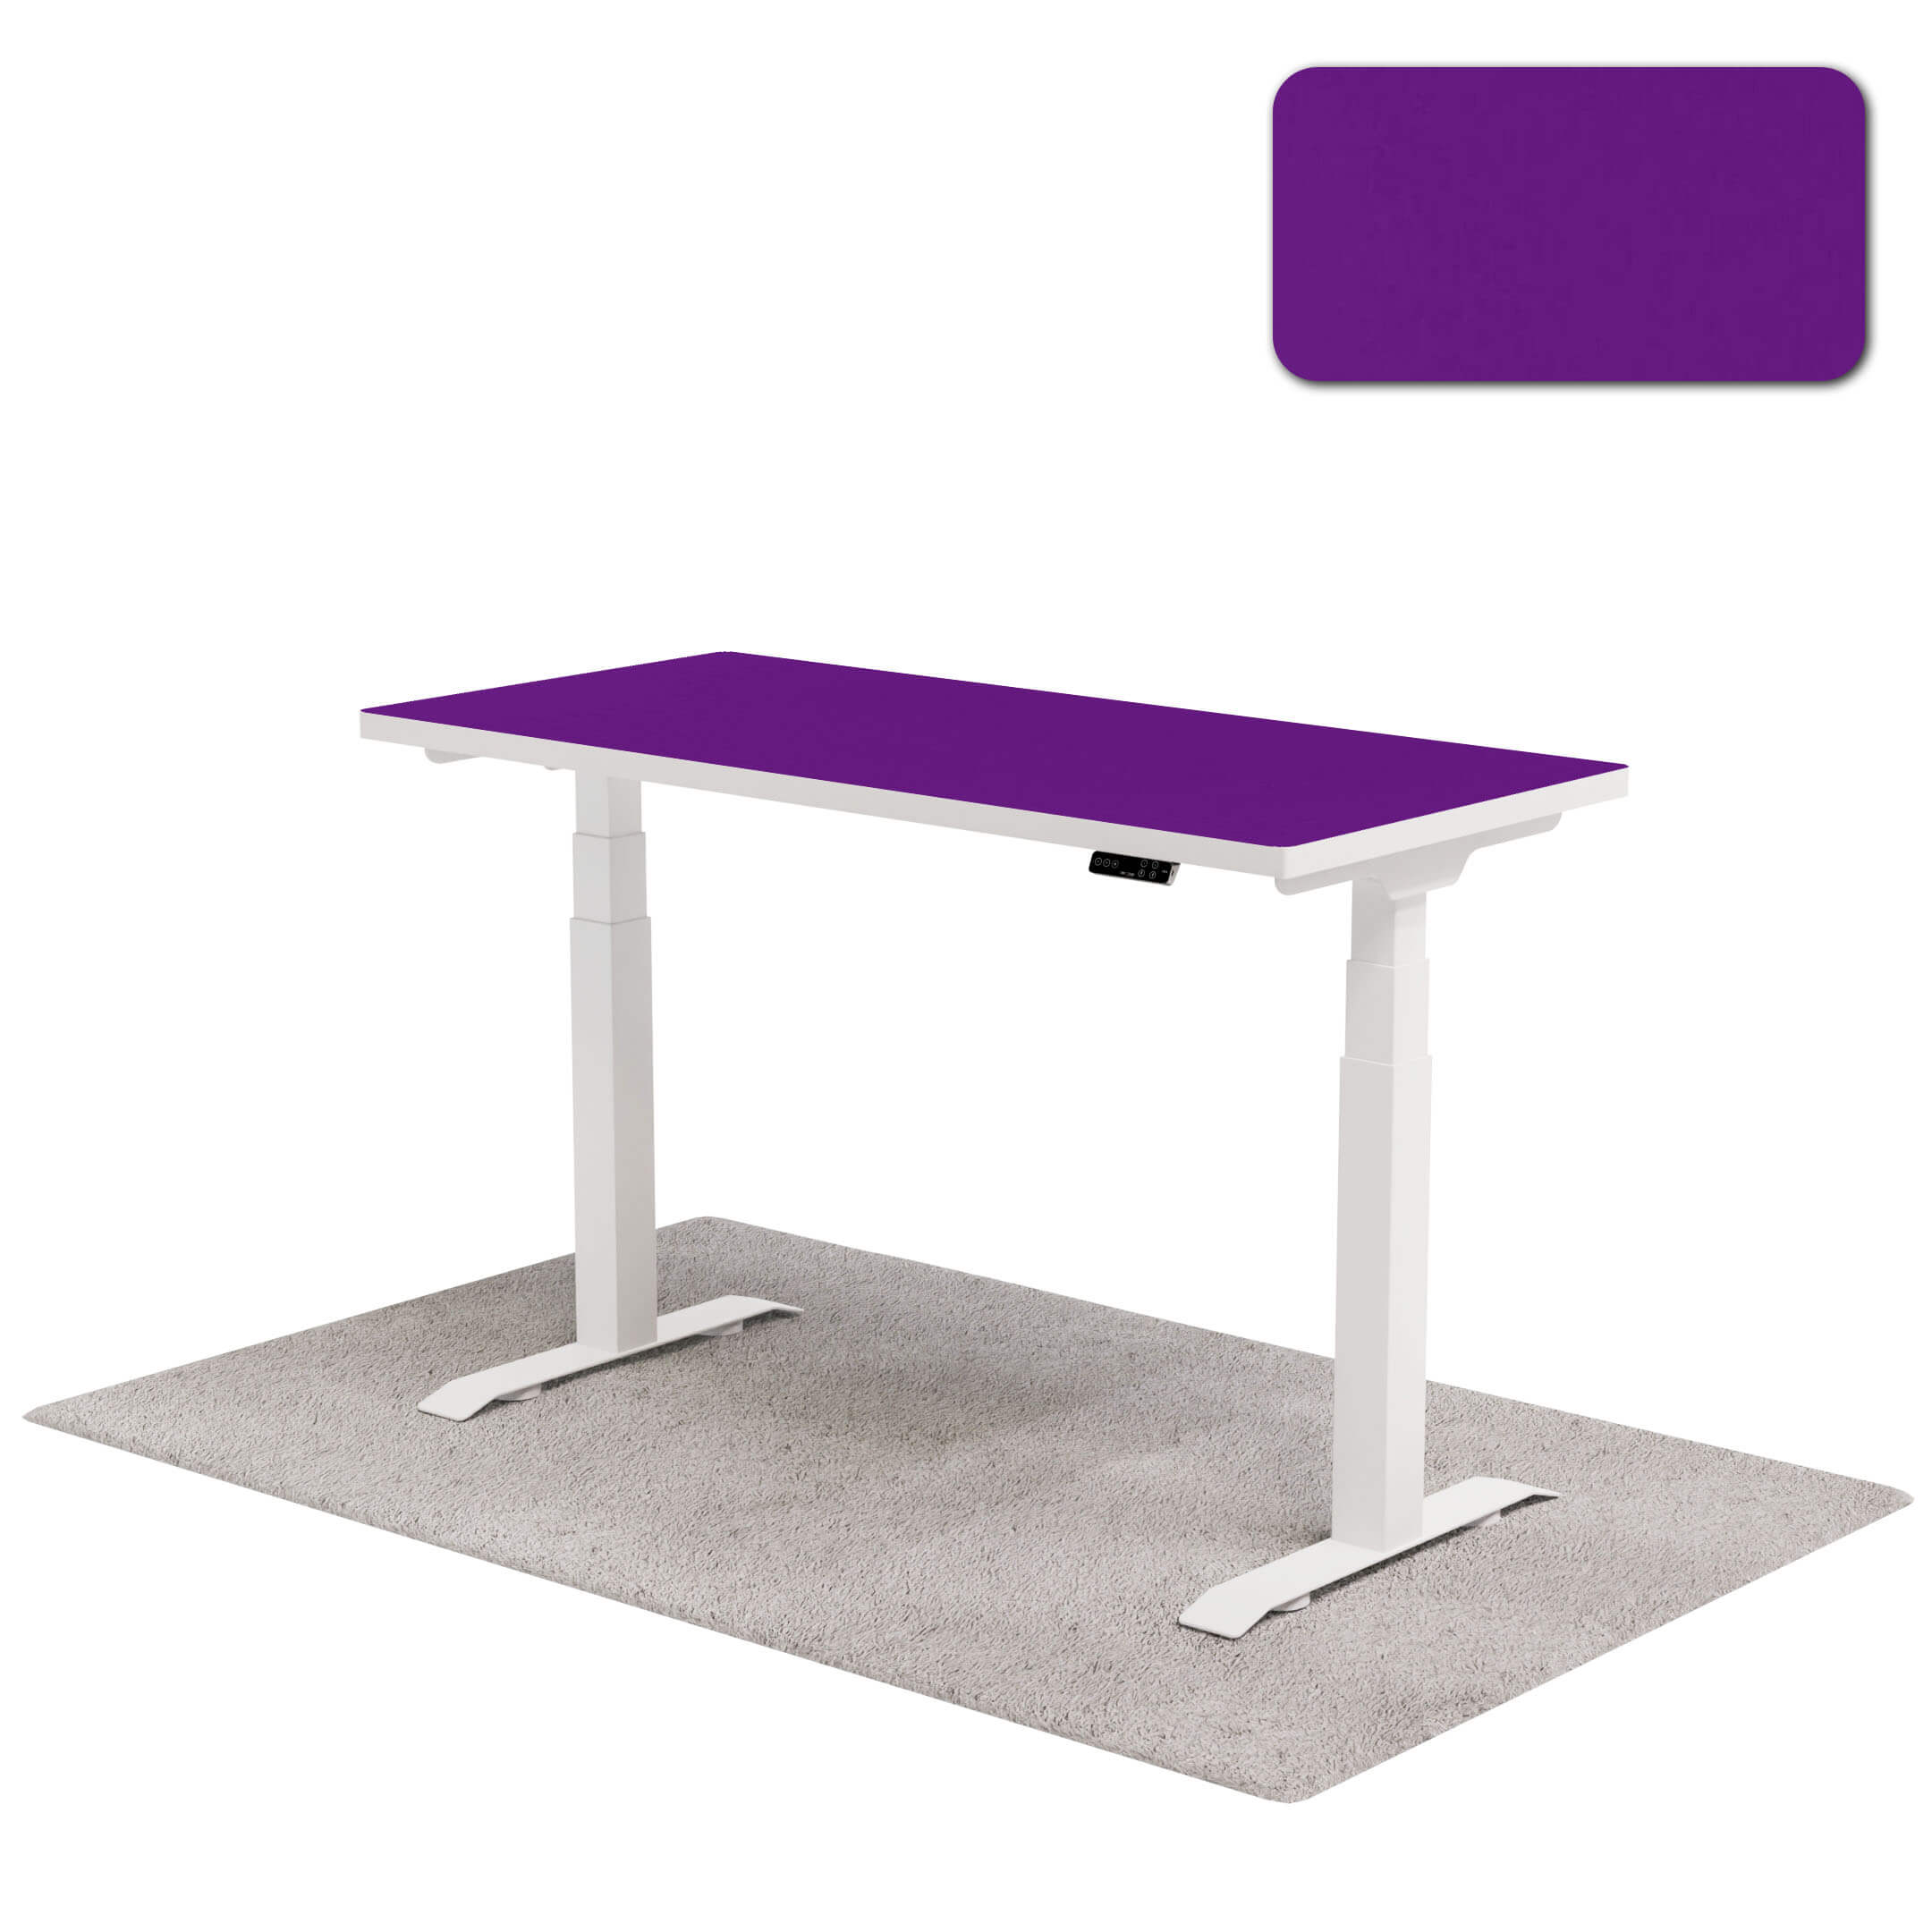 one desk Purple ODSCS006 white frame legs electric table